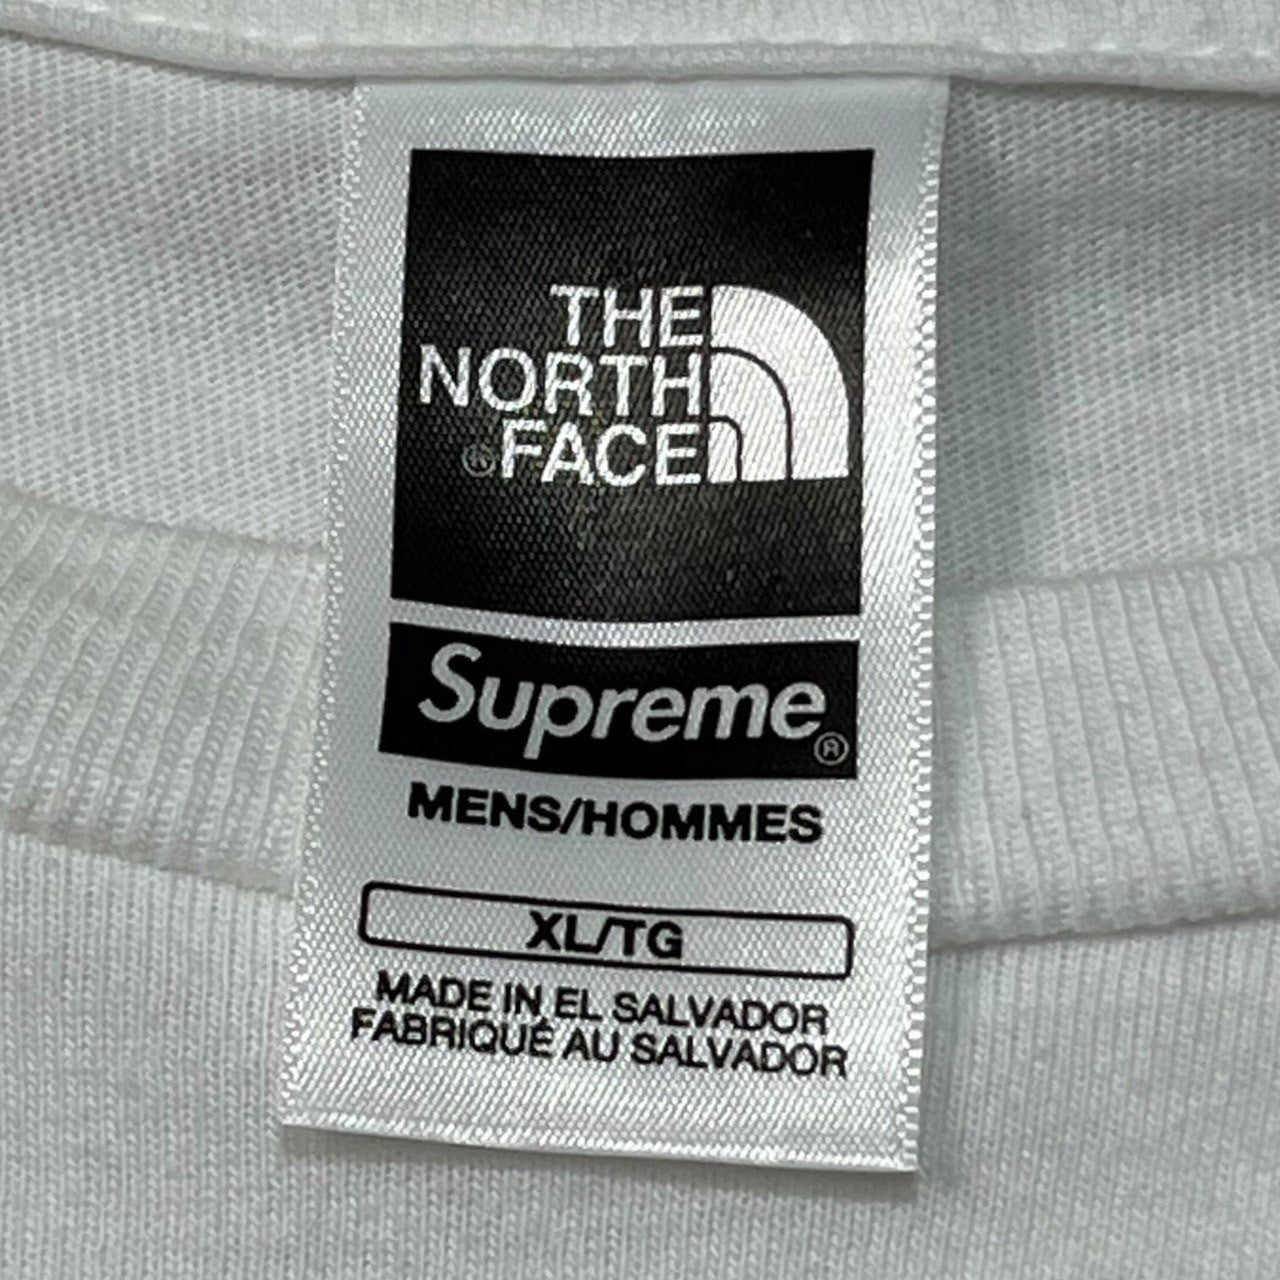 SUPREME × THE NORTH FACE(シュプリーム × ノースフェイス) 23SS The North Face Printed Pocket Tee プリント ポケットＴシャツ XL ホワイト×レッド